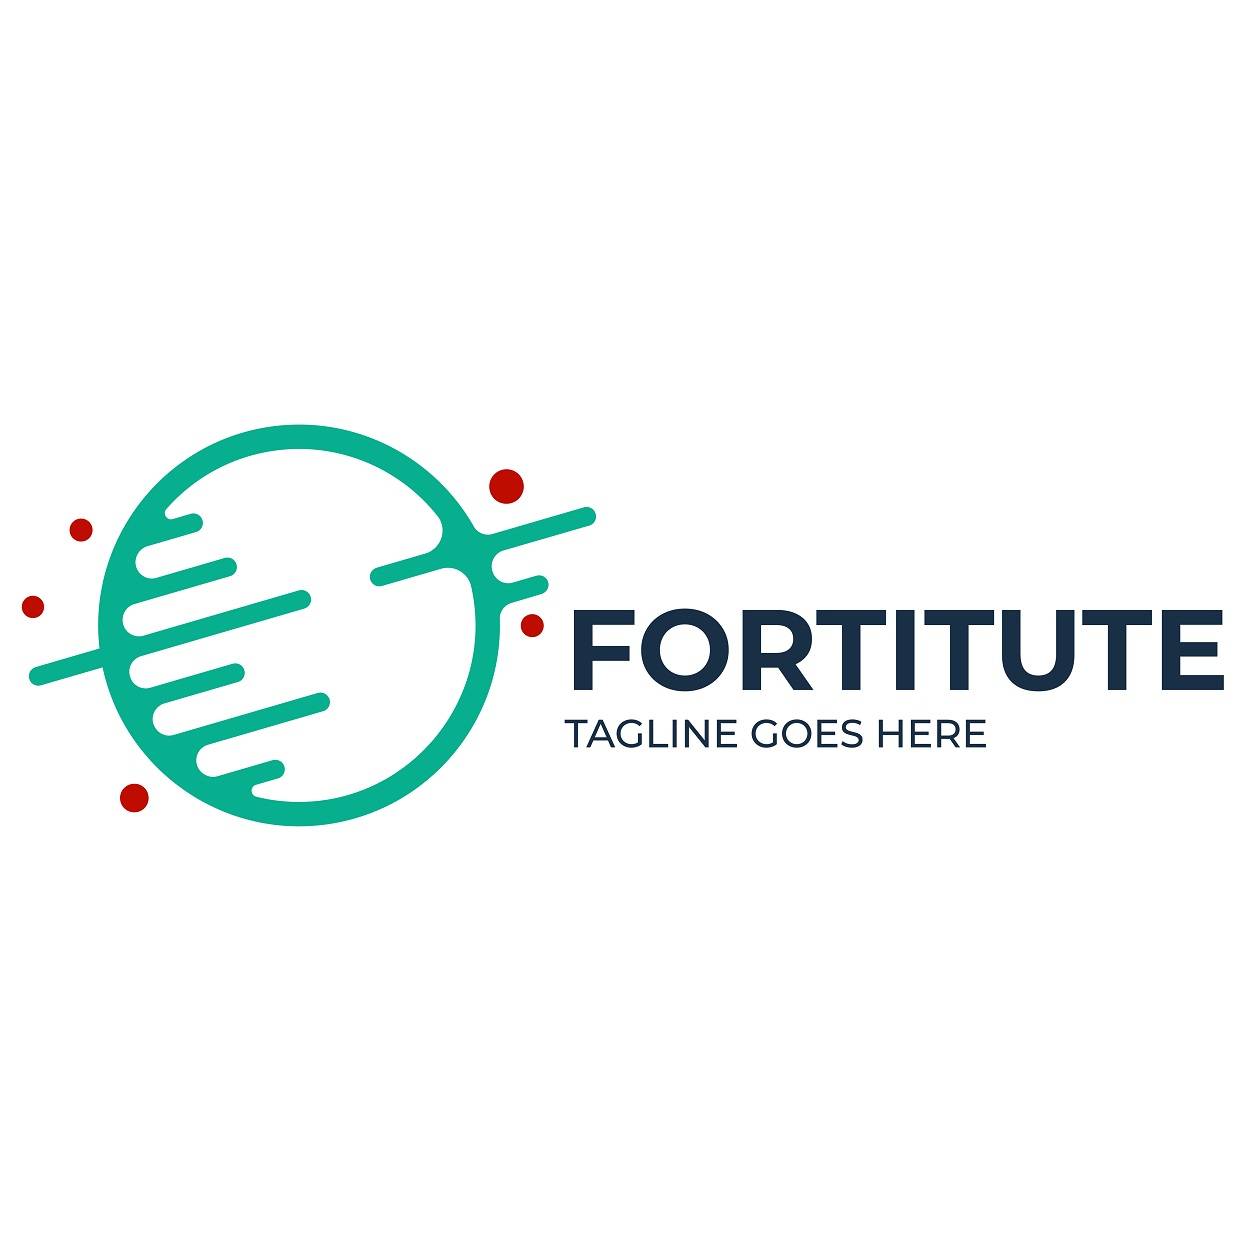 Fortitute innovative and creative logo design